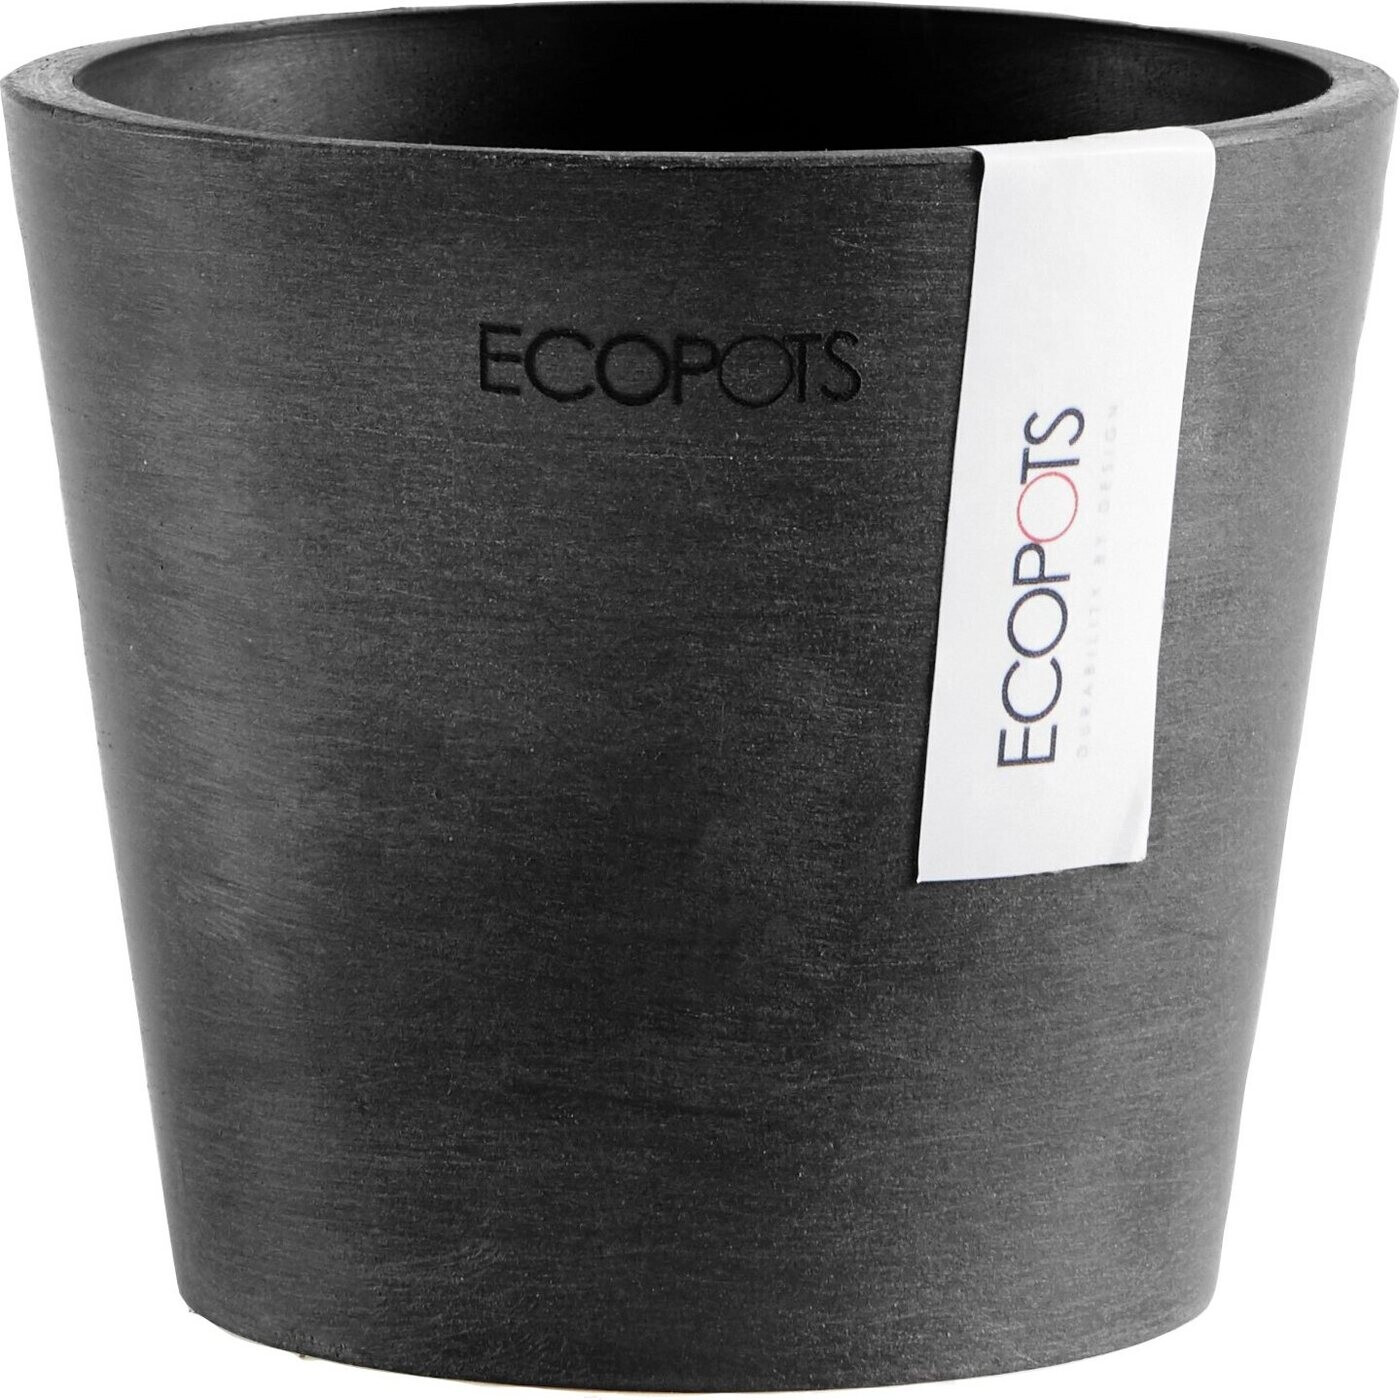 Ecopots Amsterdam Mini dunkelgrau BxTxH: 10,5x10,5x9,2 cm ab 6,95 € |  Preisvergleich bei